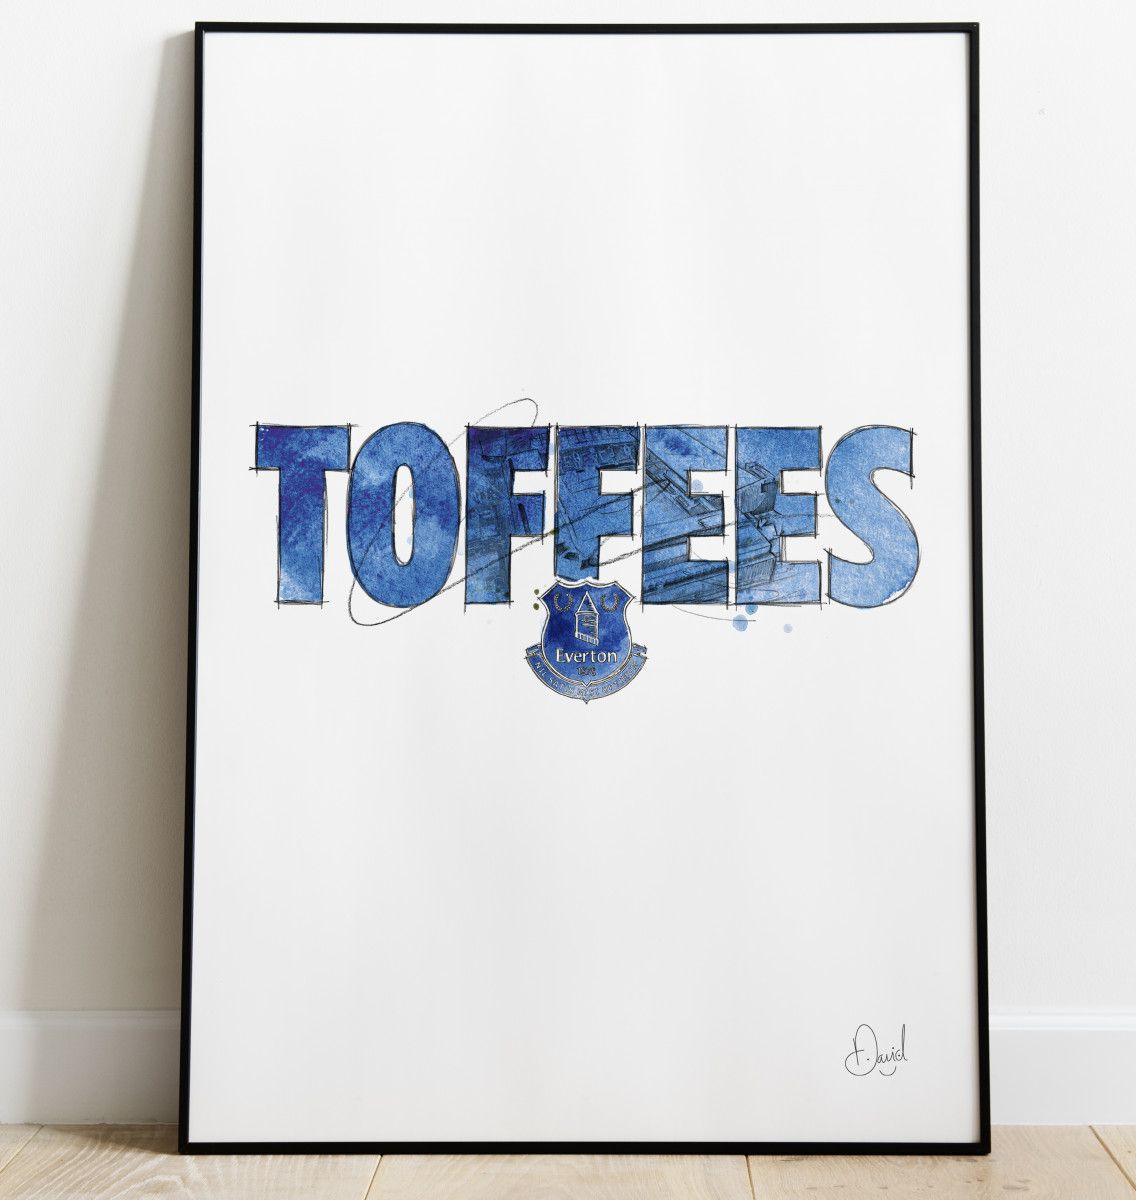 Everton FC - Toffees art print